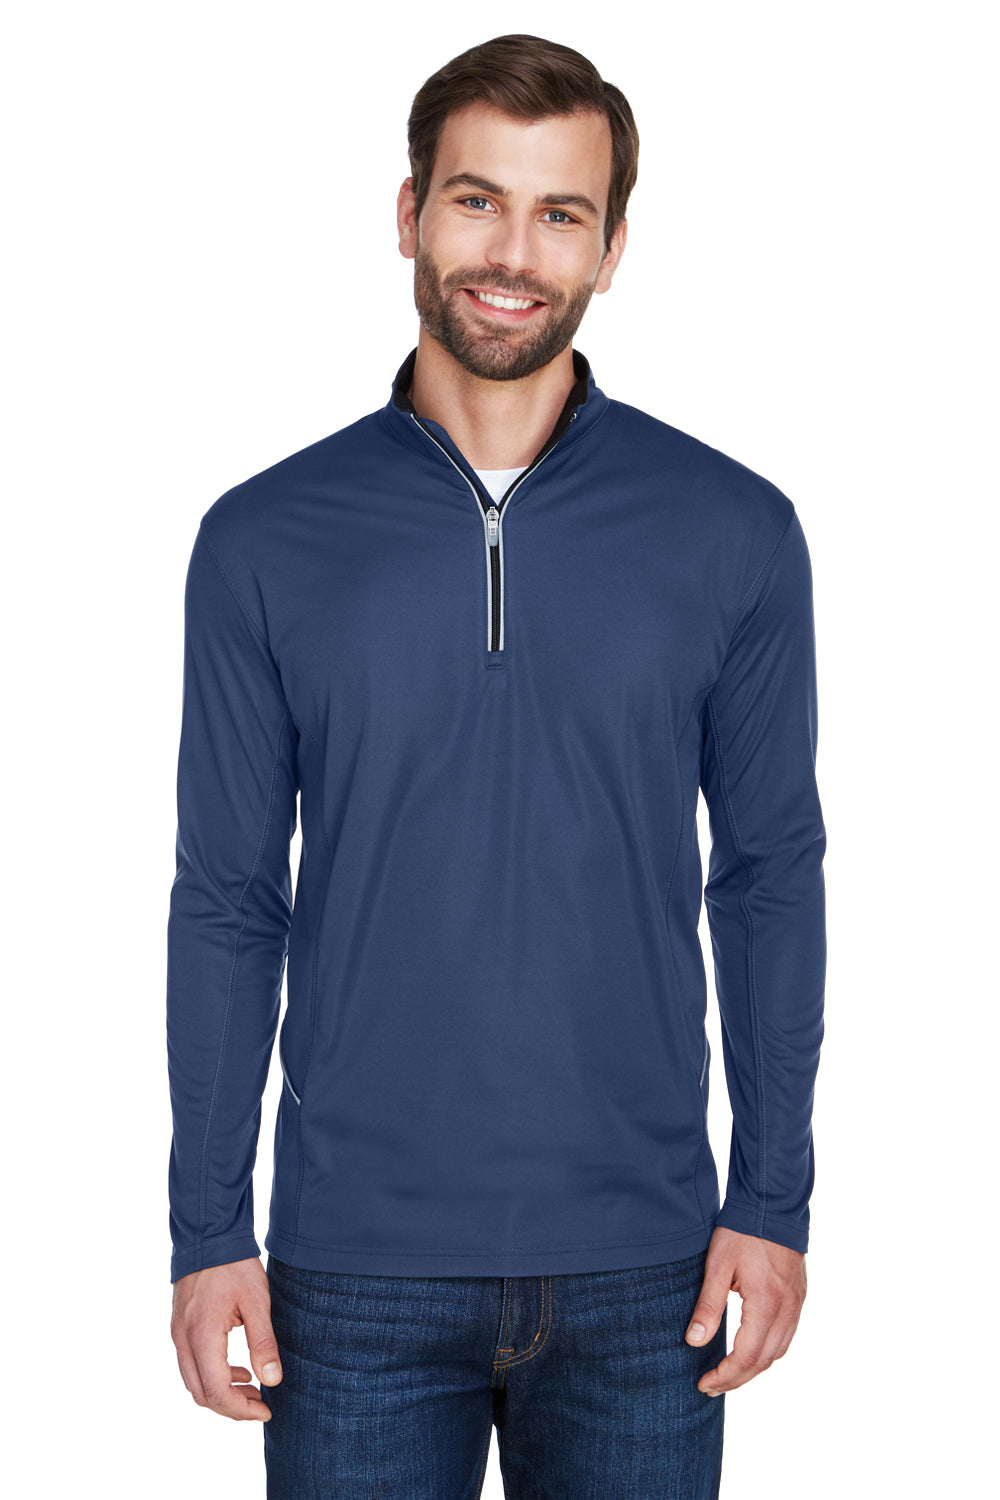 UltraClub 8230 Mens Cool & Dry Moisture Wicking 1/4 Zip Sweatshirt Navy Blue Front